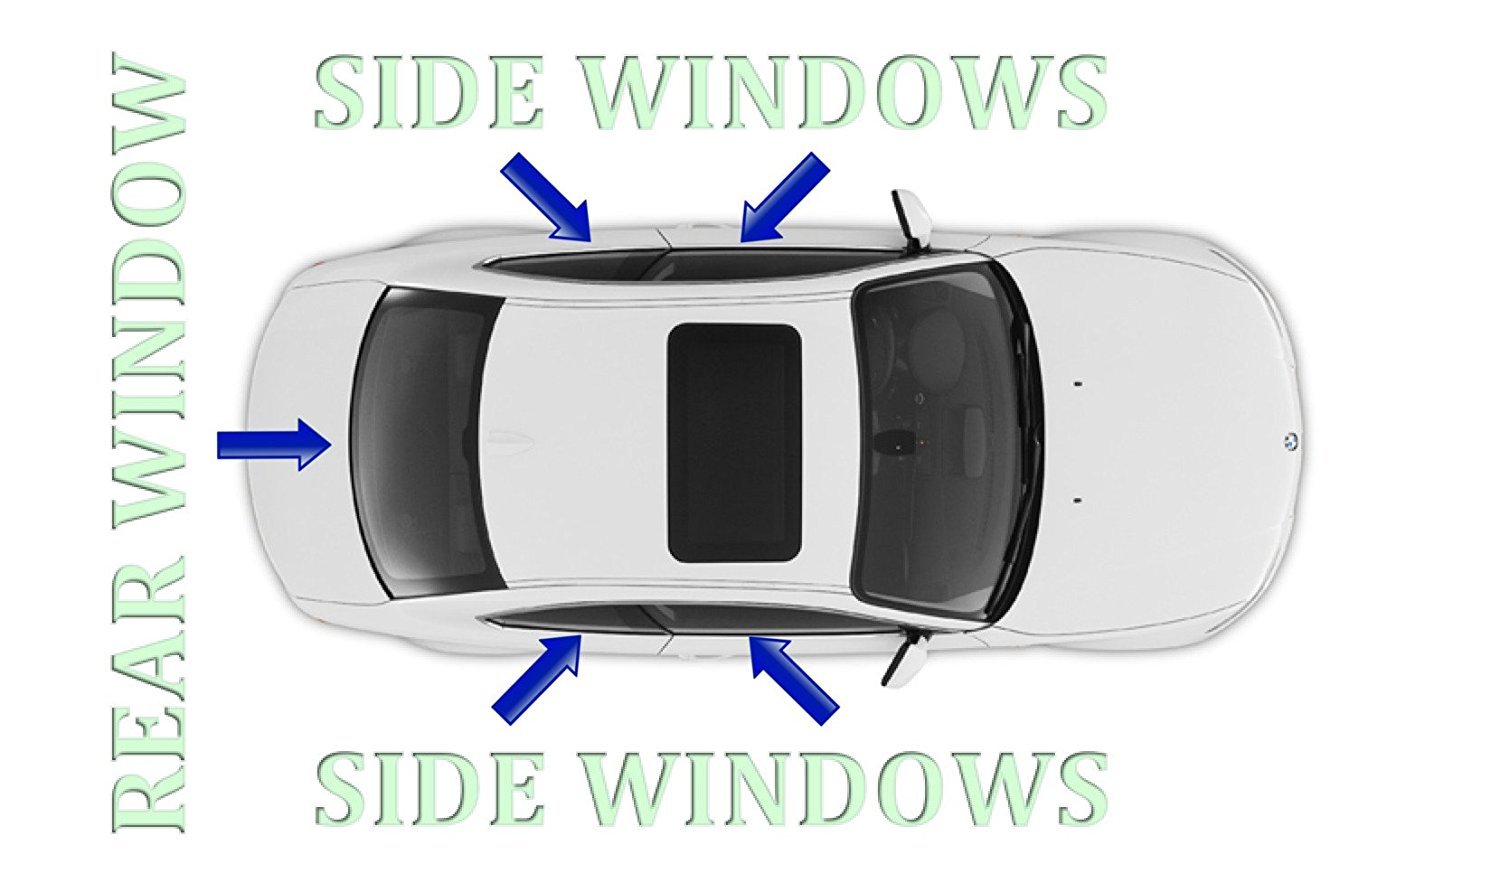 Front Sides Precut Honda Civic Coupe Window Tint Kit 